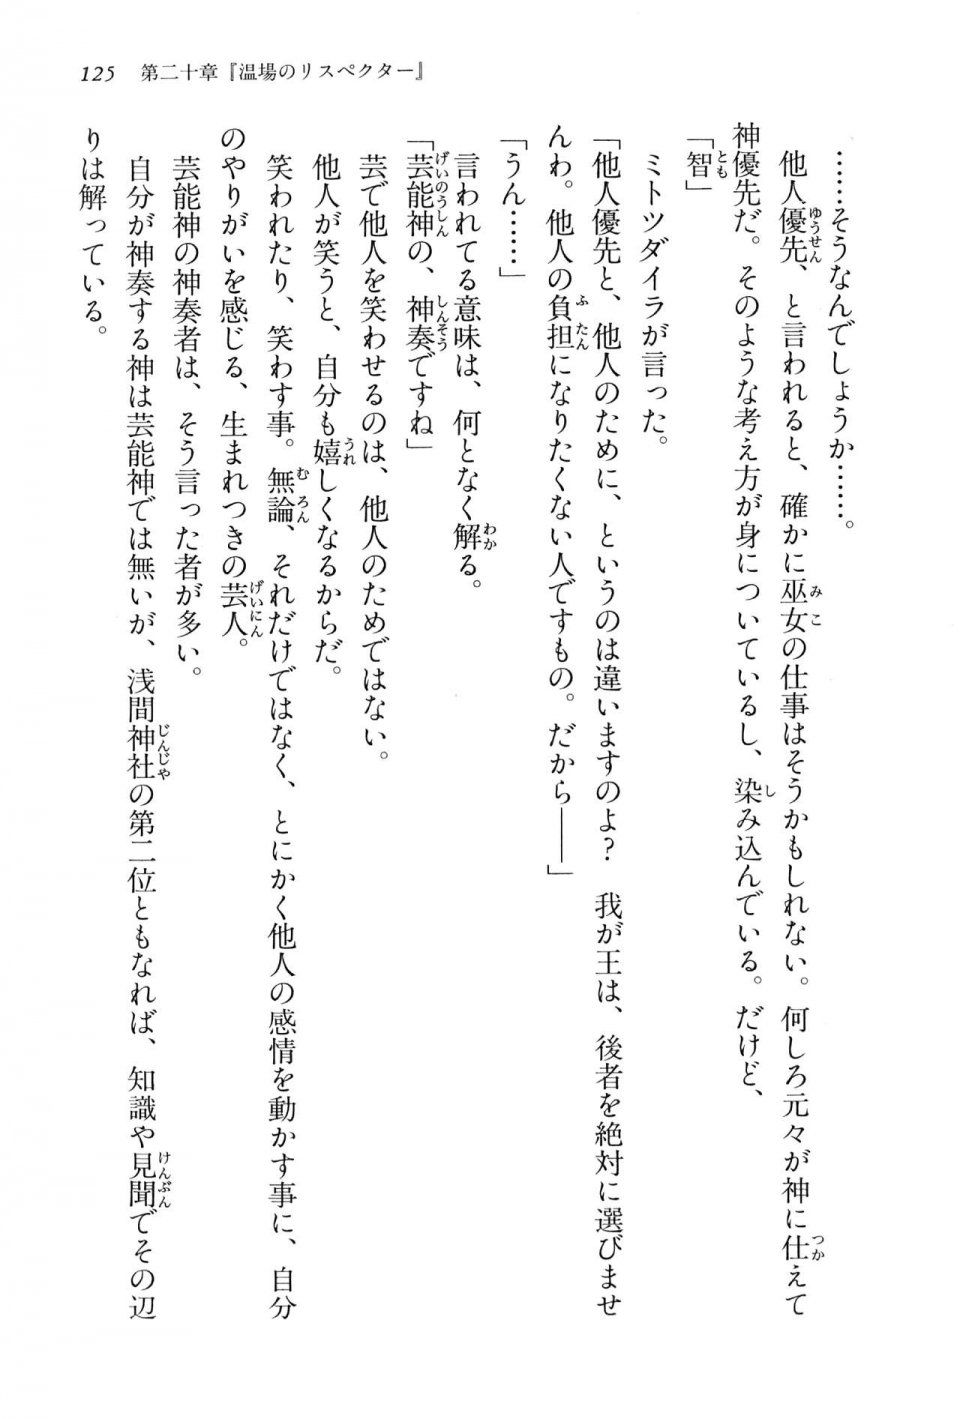 Kyoukai Senjou no Horizon BD Special Mininovel Vol 4(2B) - Photo #129